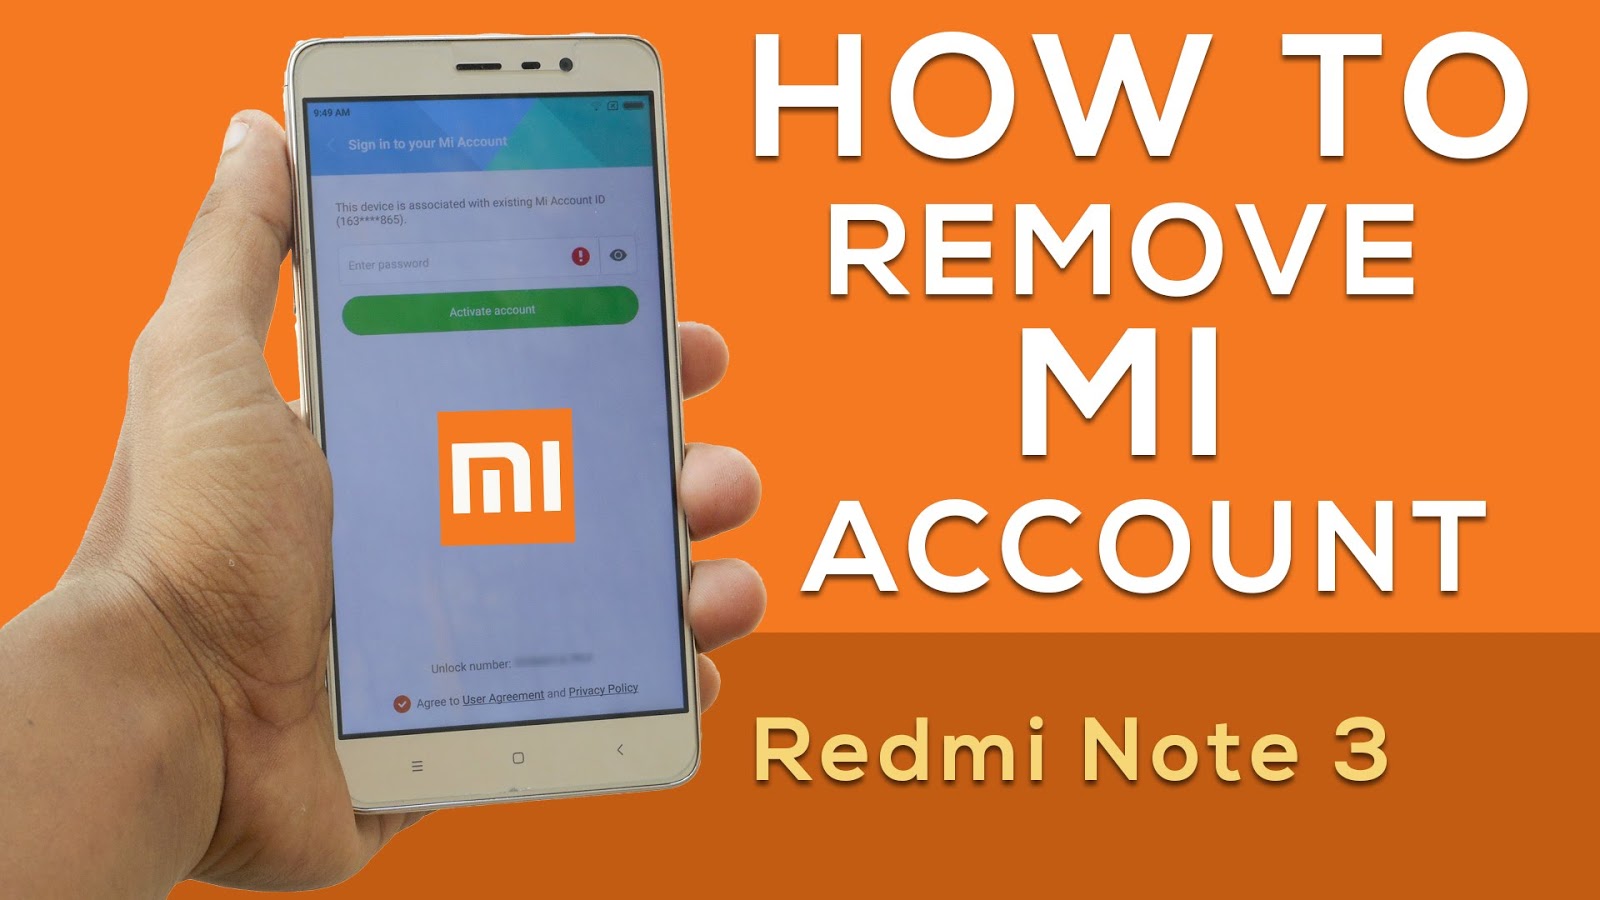 Redmi Pro Account Unlock